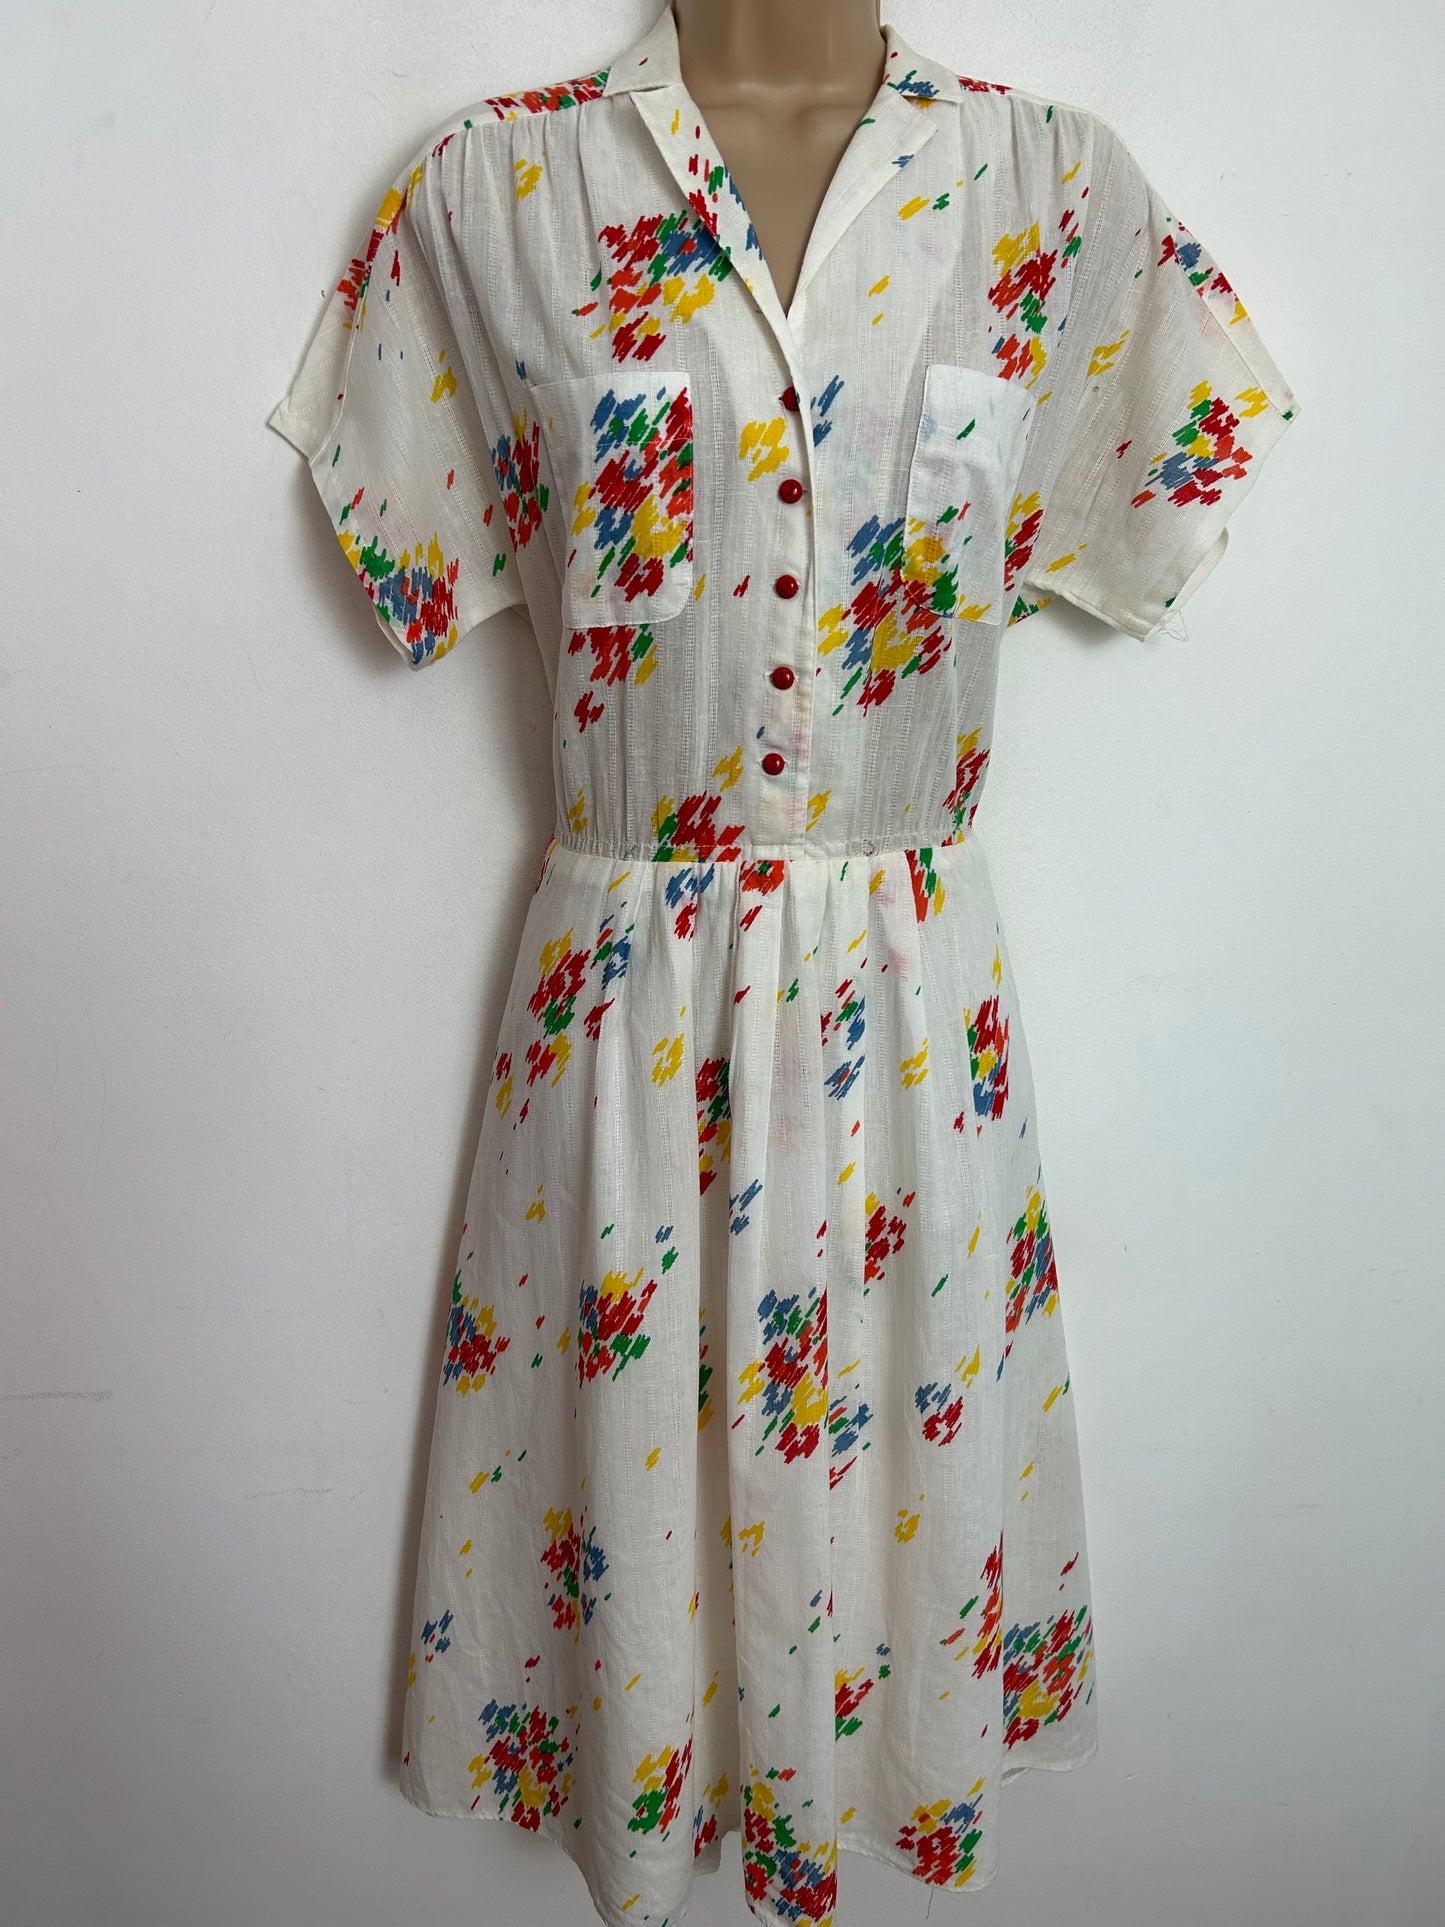 Vintage Late 1970s/Early 1980s UK Size 12 White Cotton & Multicolour Stripe Print Cotton Day Dress